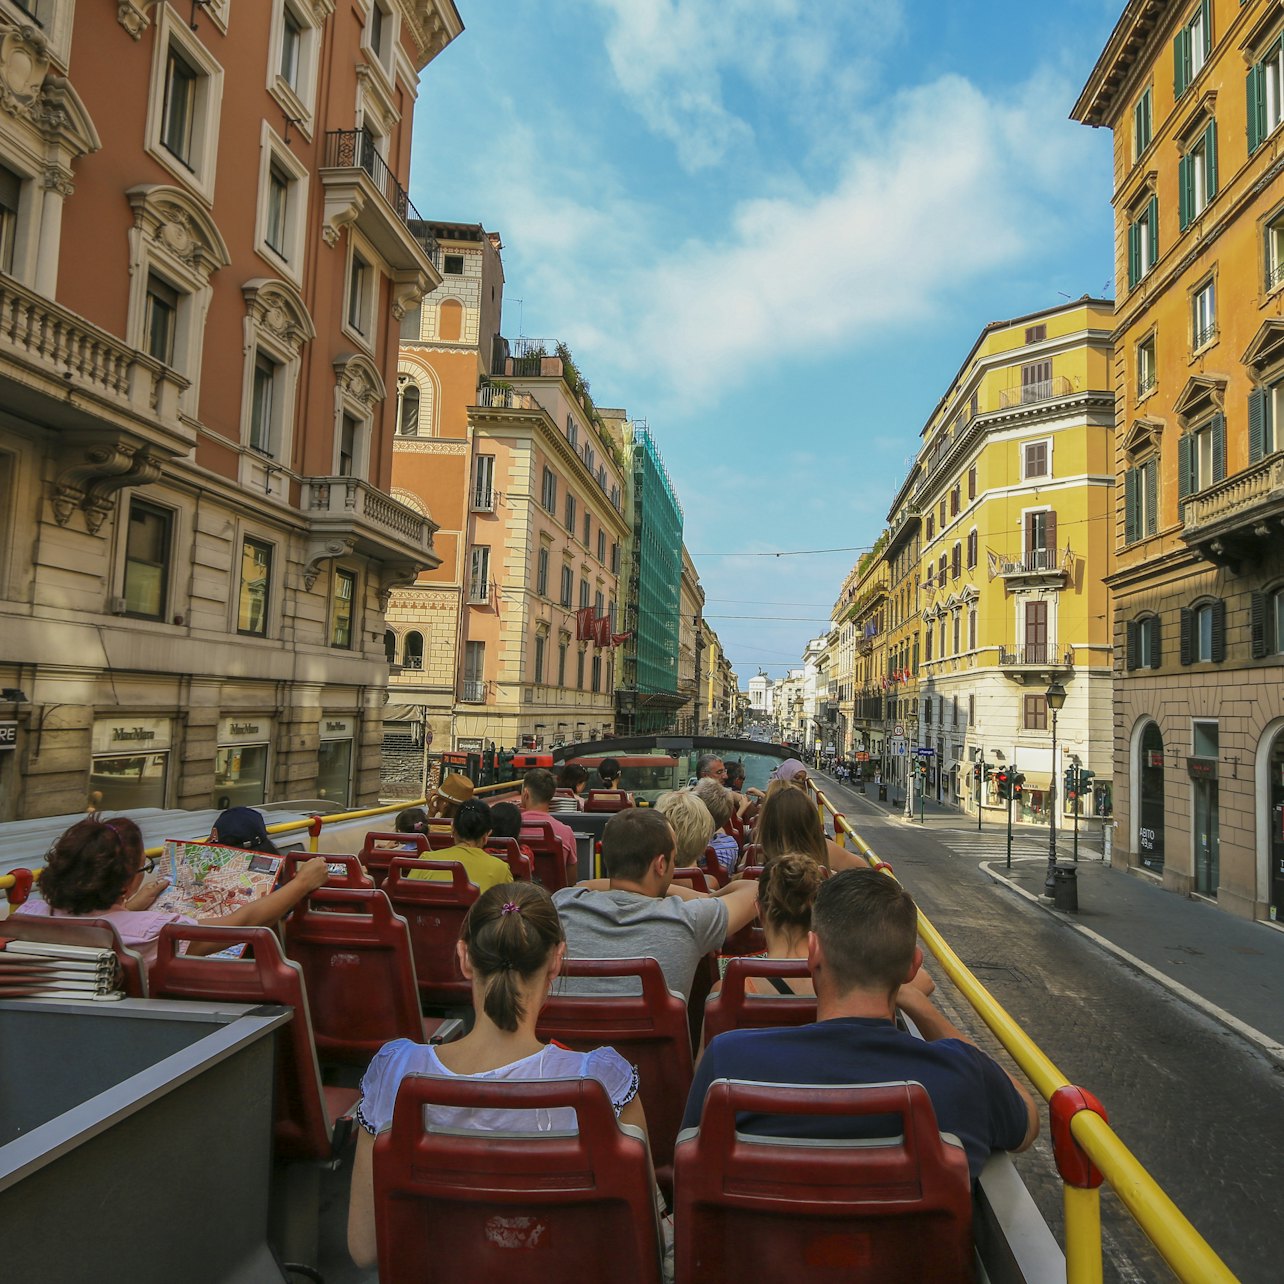 City Sightseeing Roma: Tour en bus turístico descubierto - Alojamientos en Roma